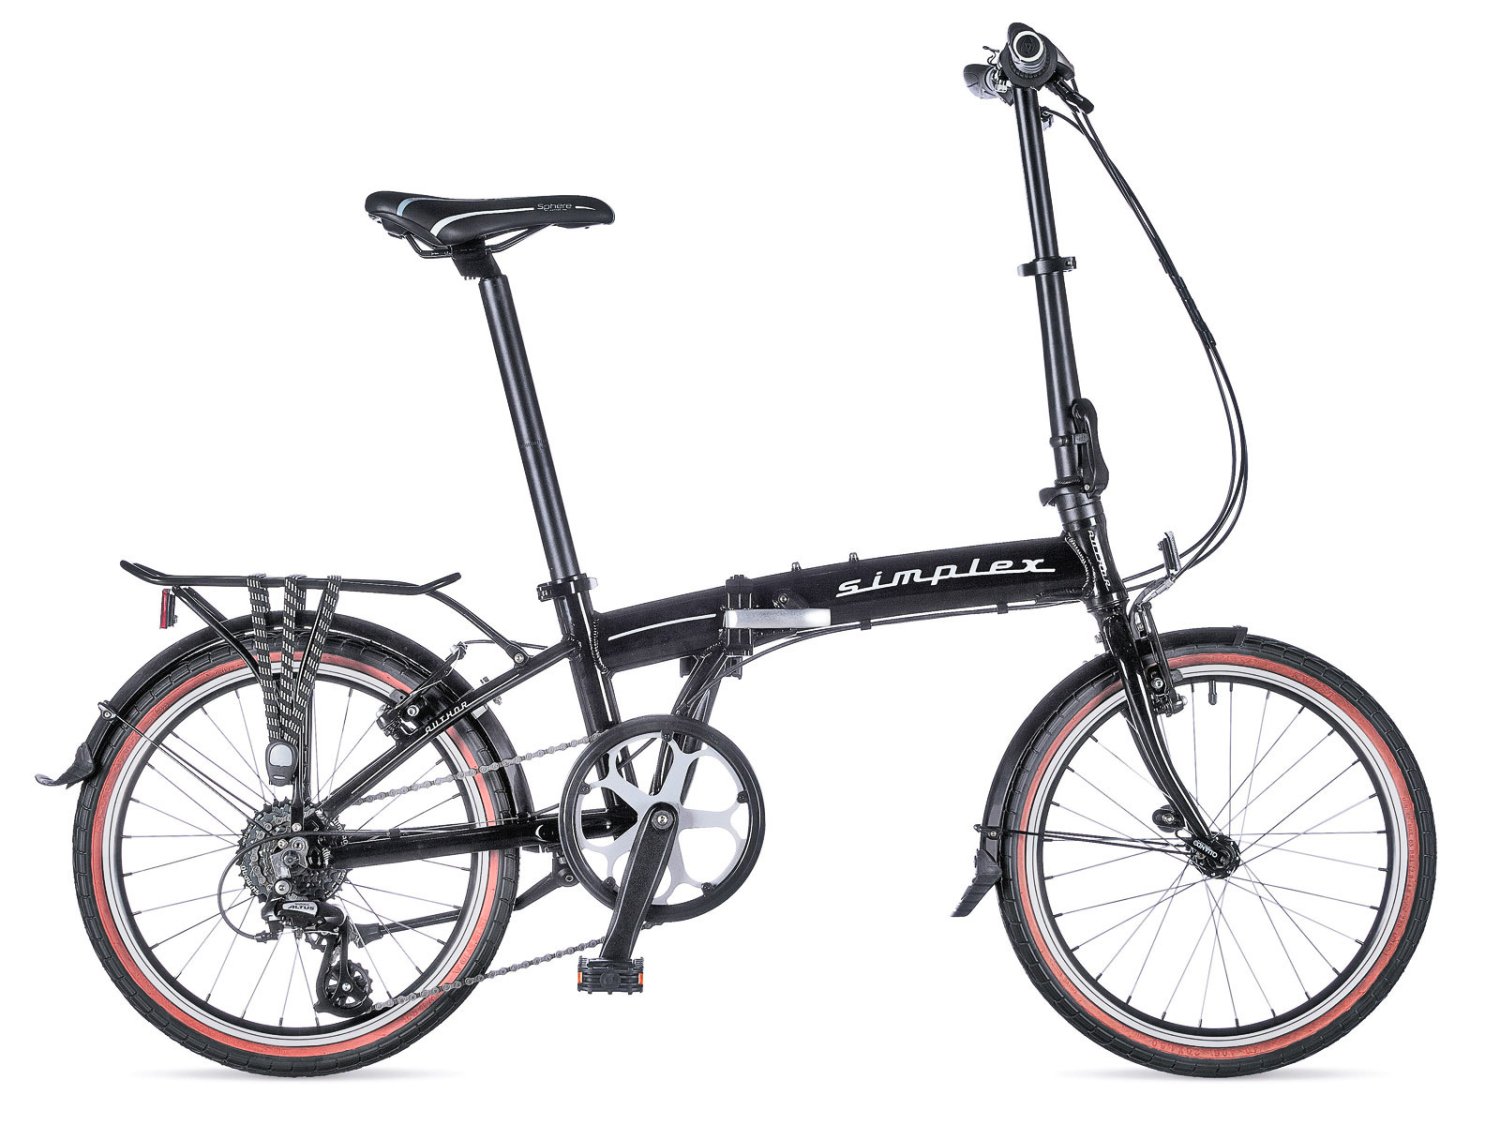 Рама велосипедная AUTHOR, алюминиевая, складная, с замком, для Simplex 2015, черная, 8-2015001 рама складная avenger h2010